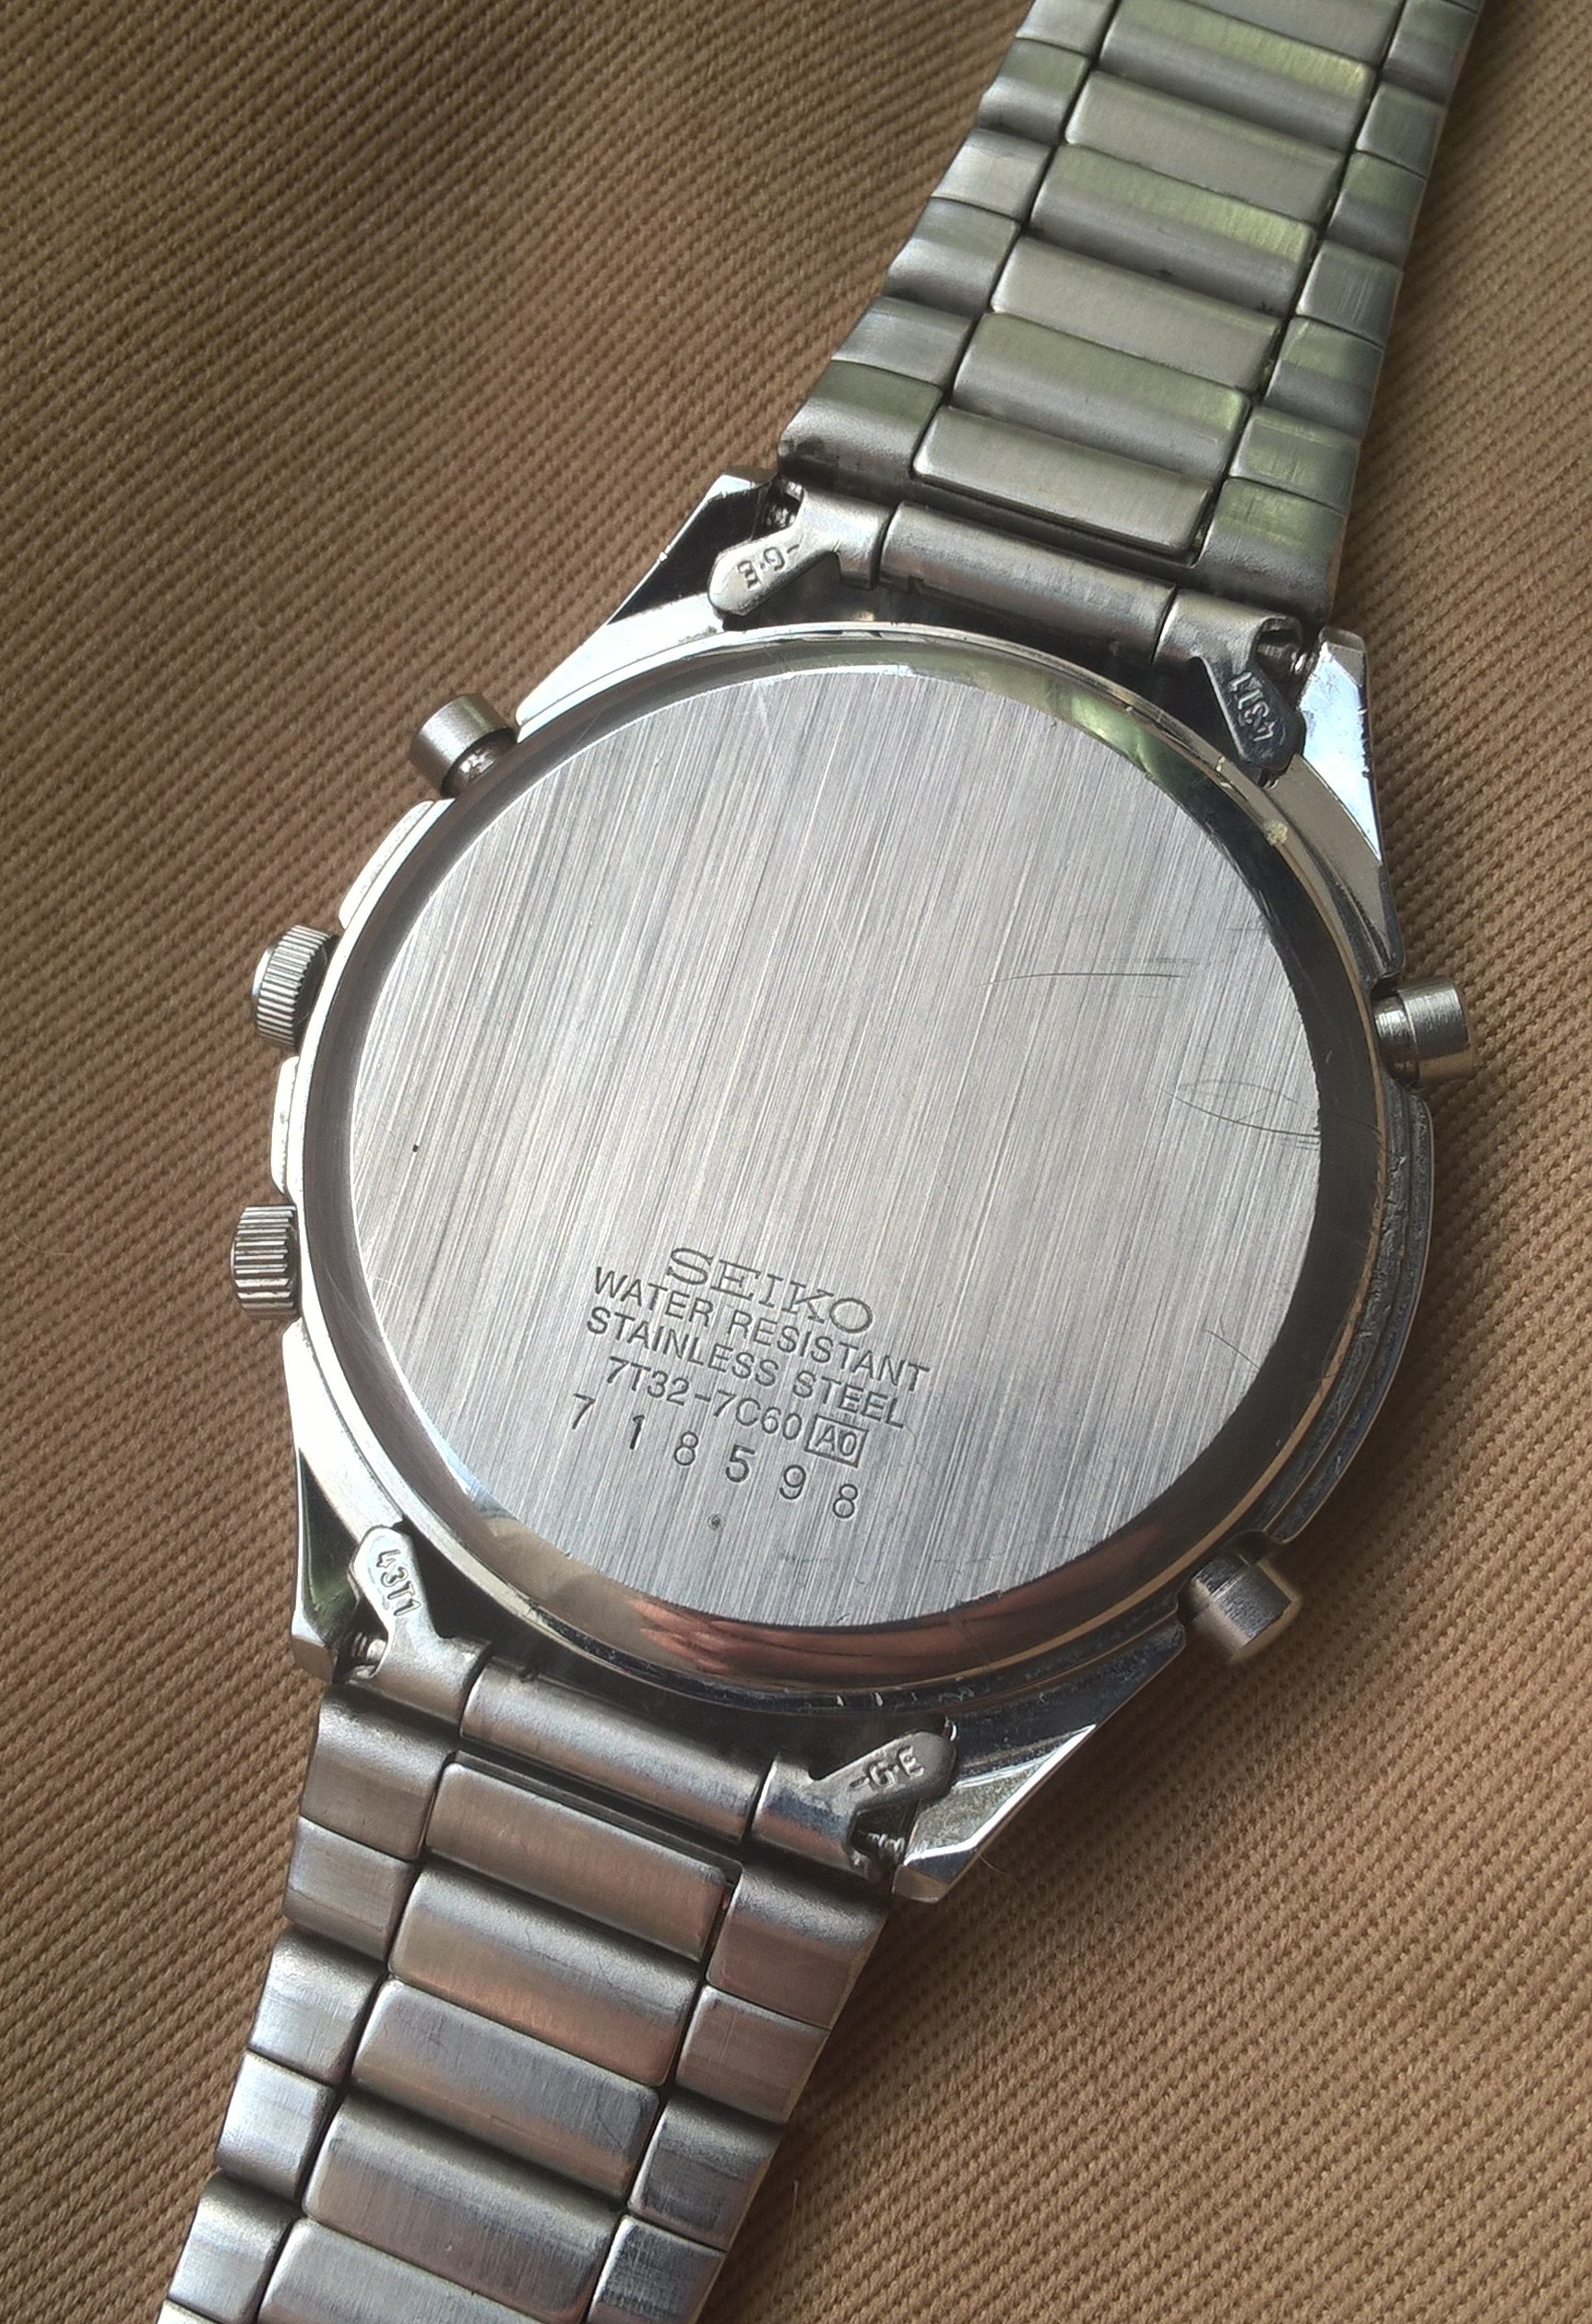 SOLD: Seiko 7t32-7c60 Panda Chronograph | WatchUSeek Watch Forums